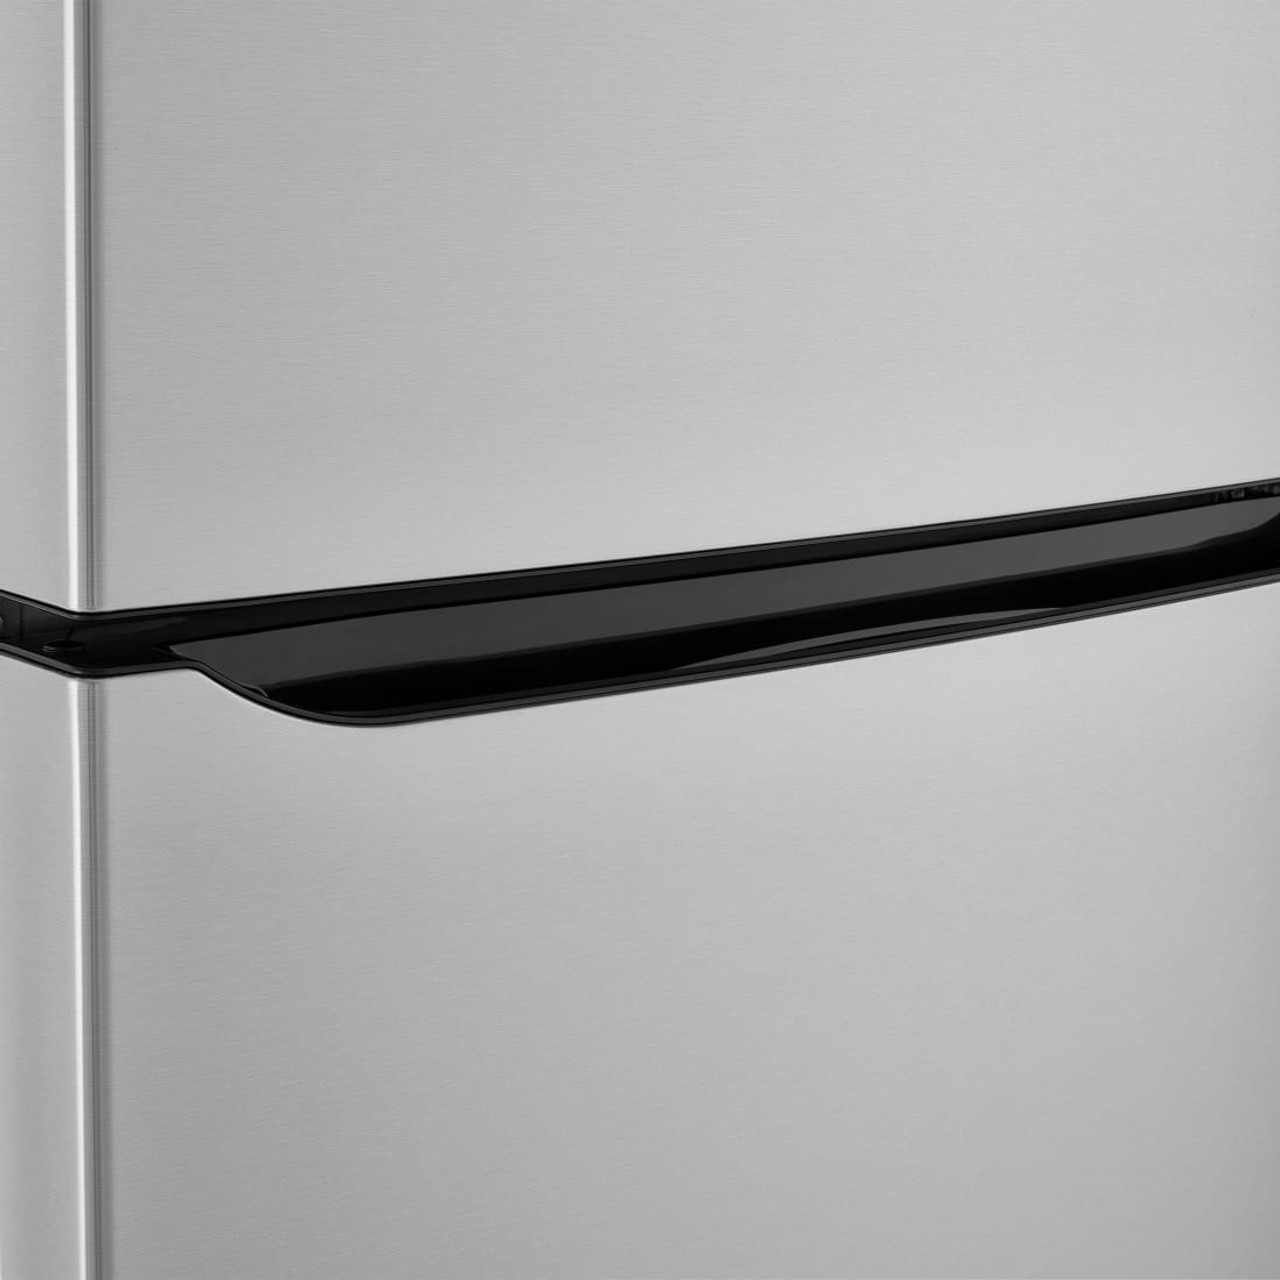 Buy LG 24 cu.ft. Top Freezer Refrigerator | Conn's HomePlus